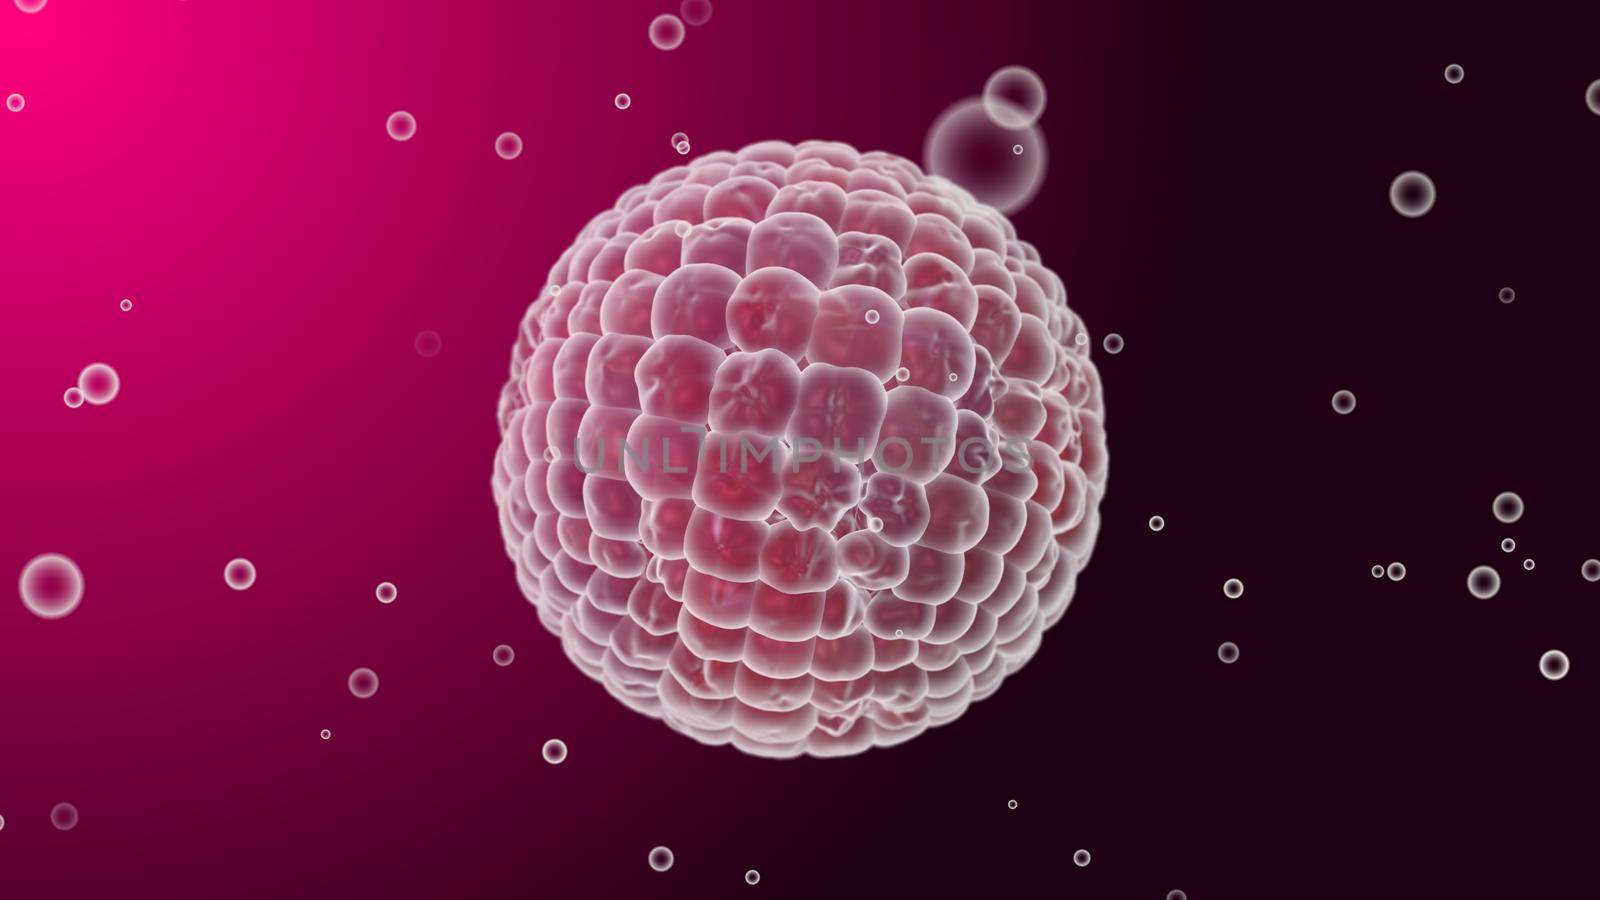 Bacteria virus render on a dark pink background by clusterx